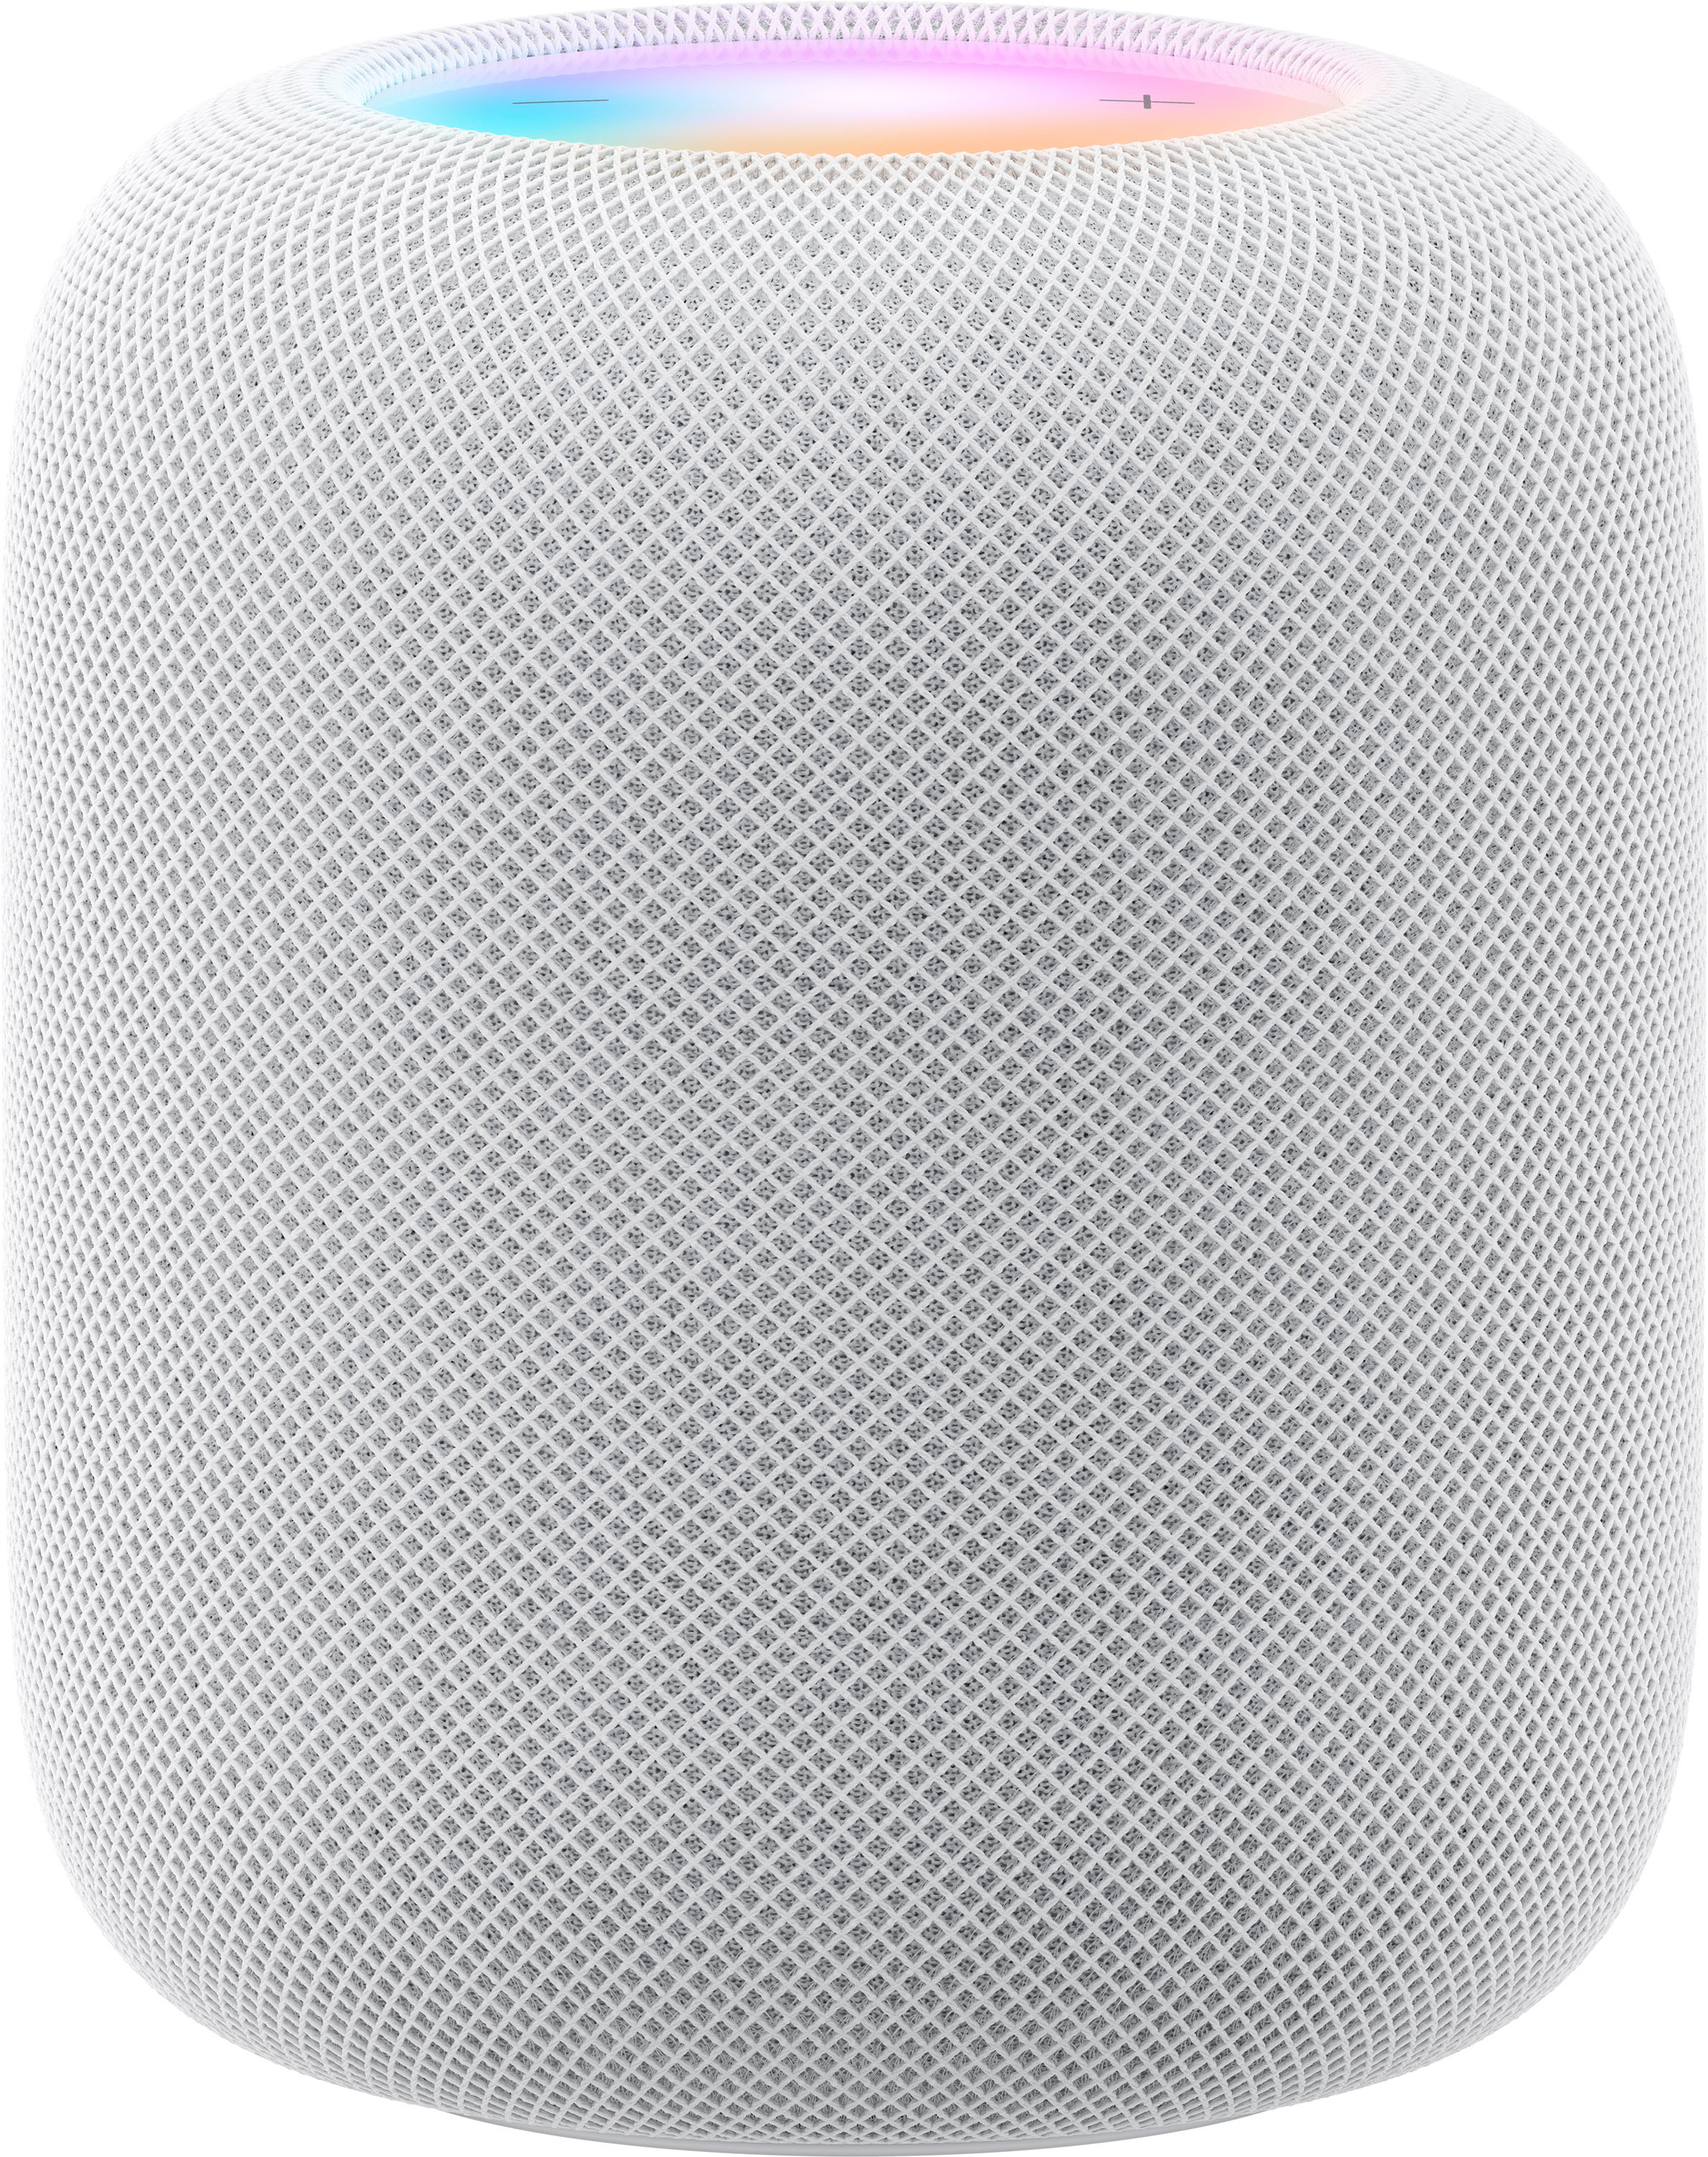 Apple HomePod (2nd Generation) Smart Speaker with Siri White 